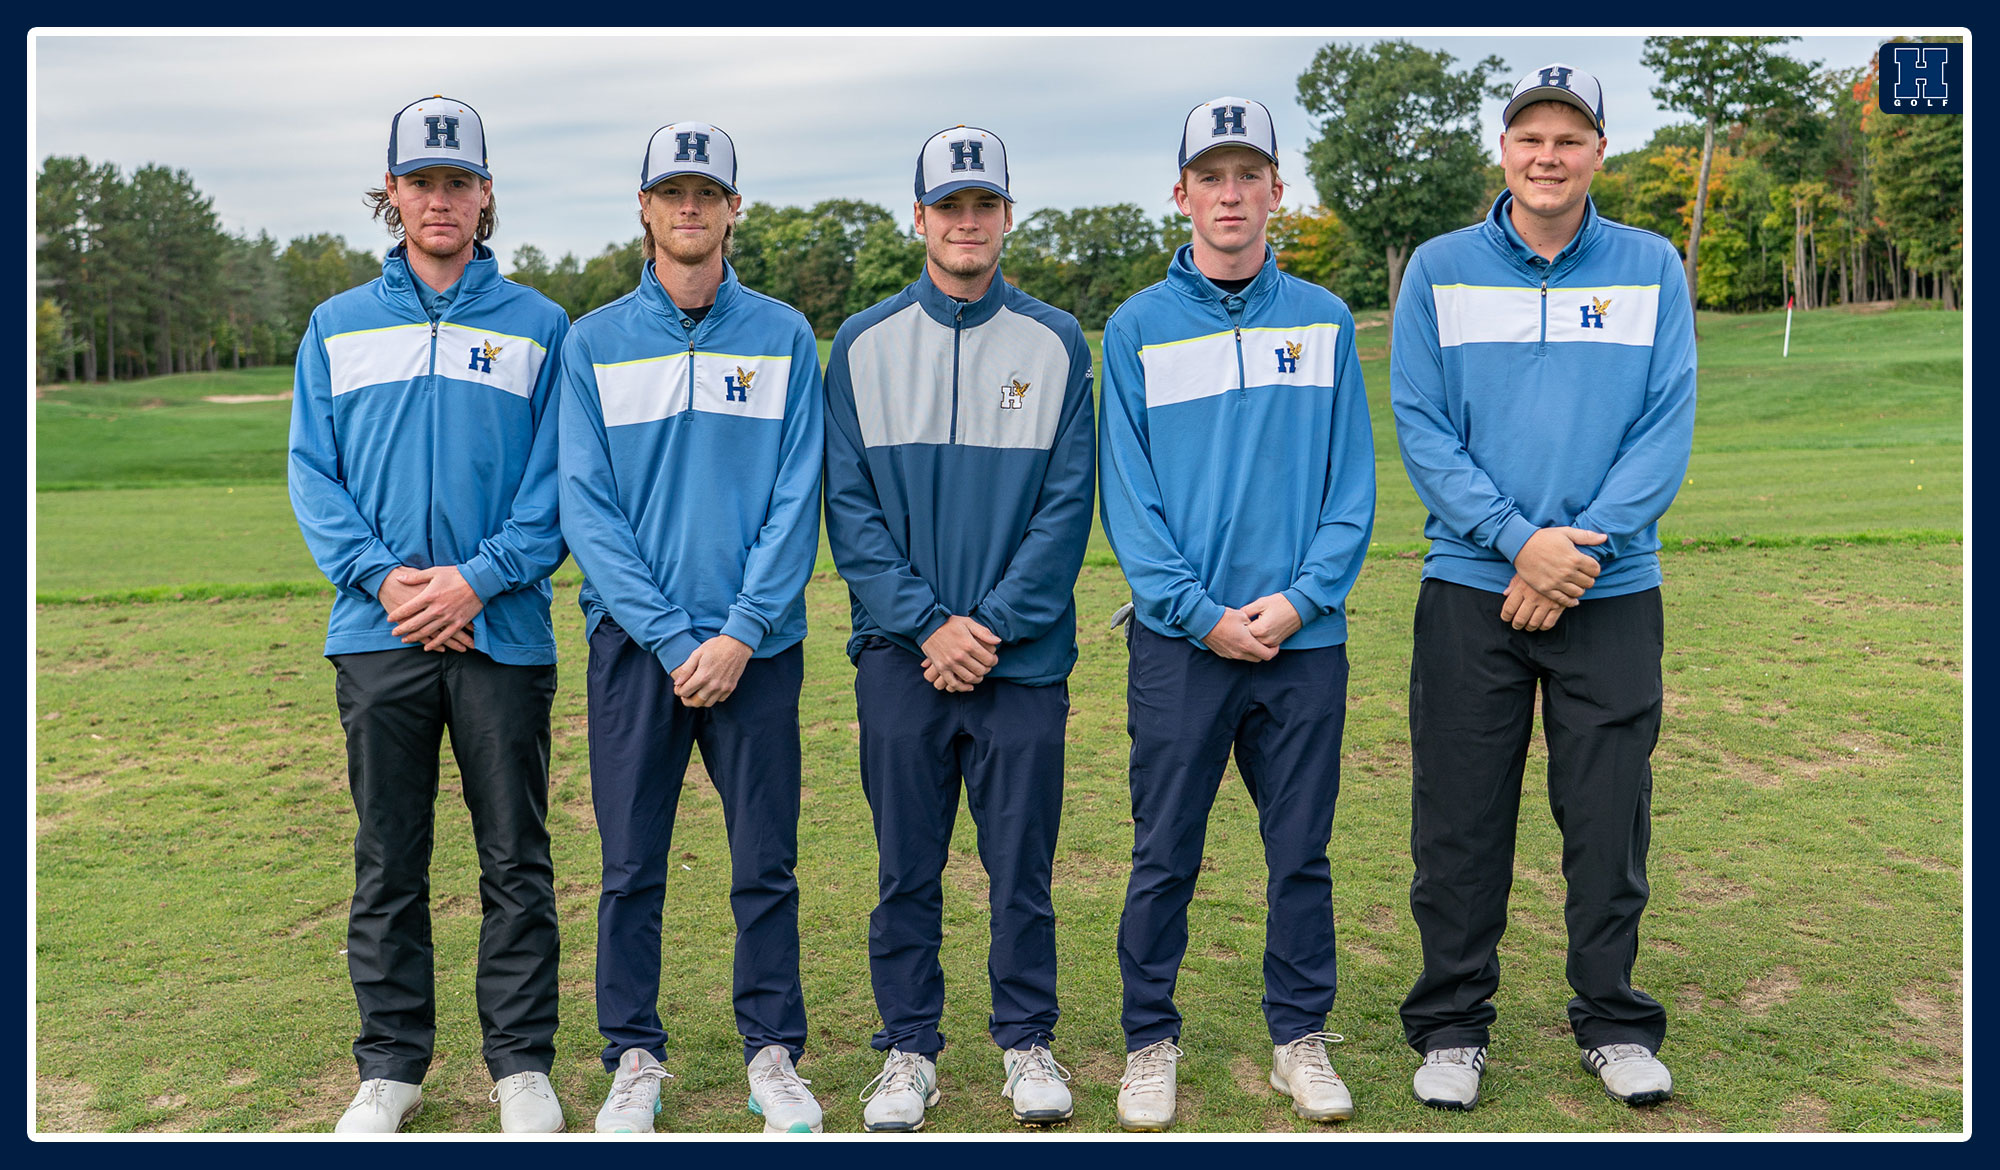 Men's golf team photo from provincials